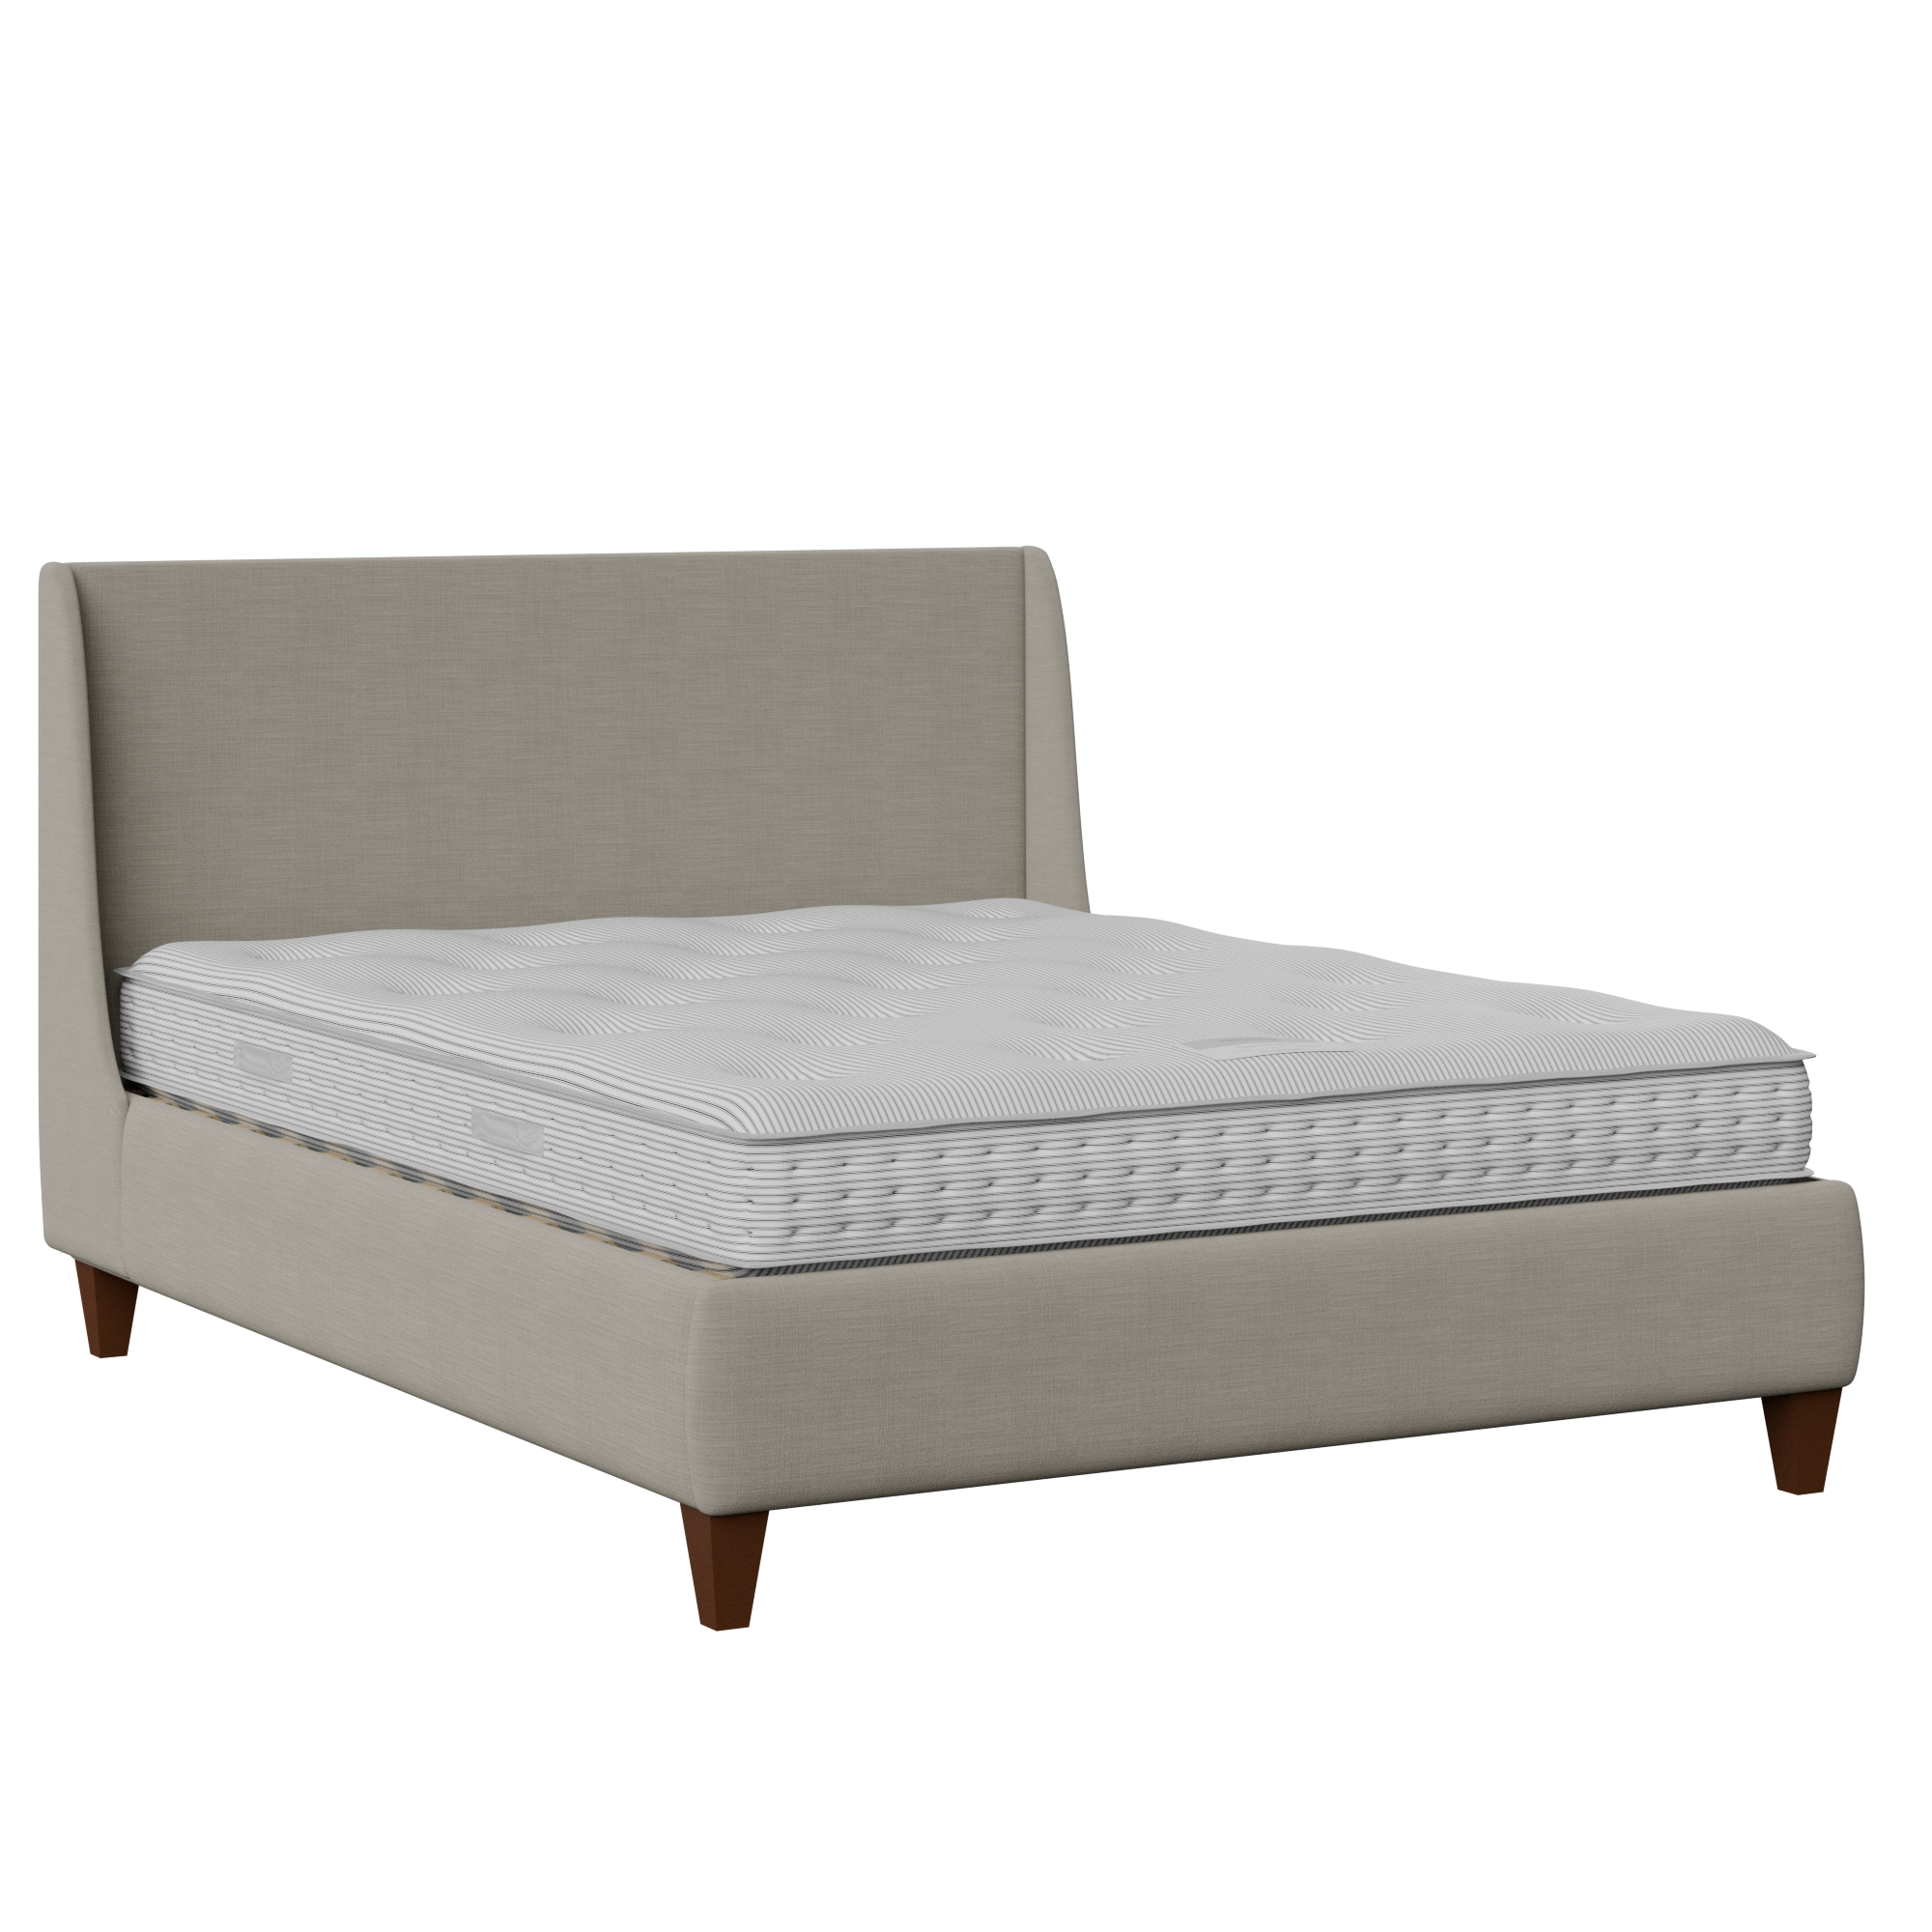 Sunderland upholstered bed in grey fabric